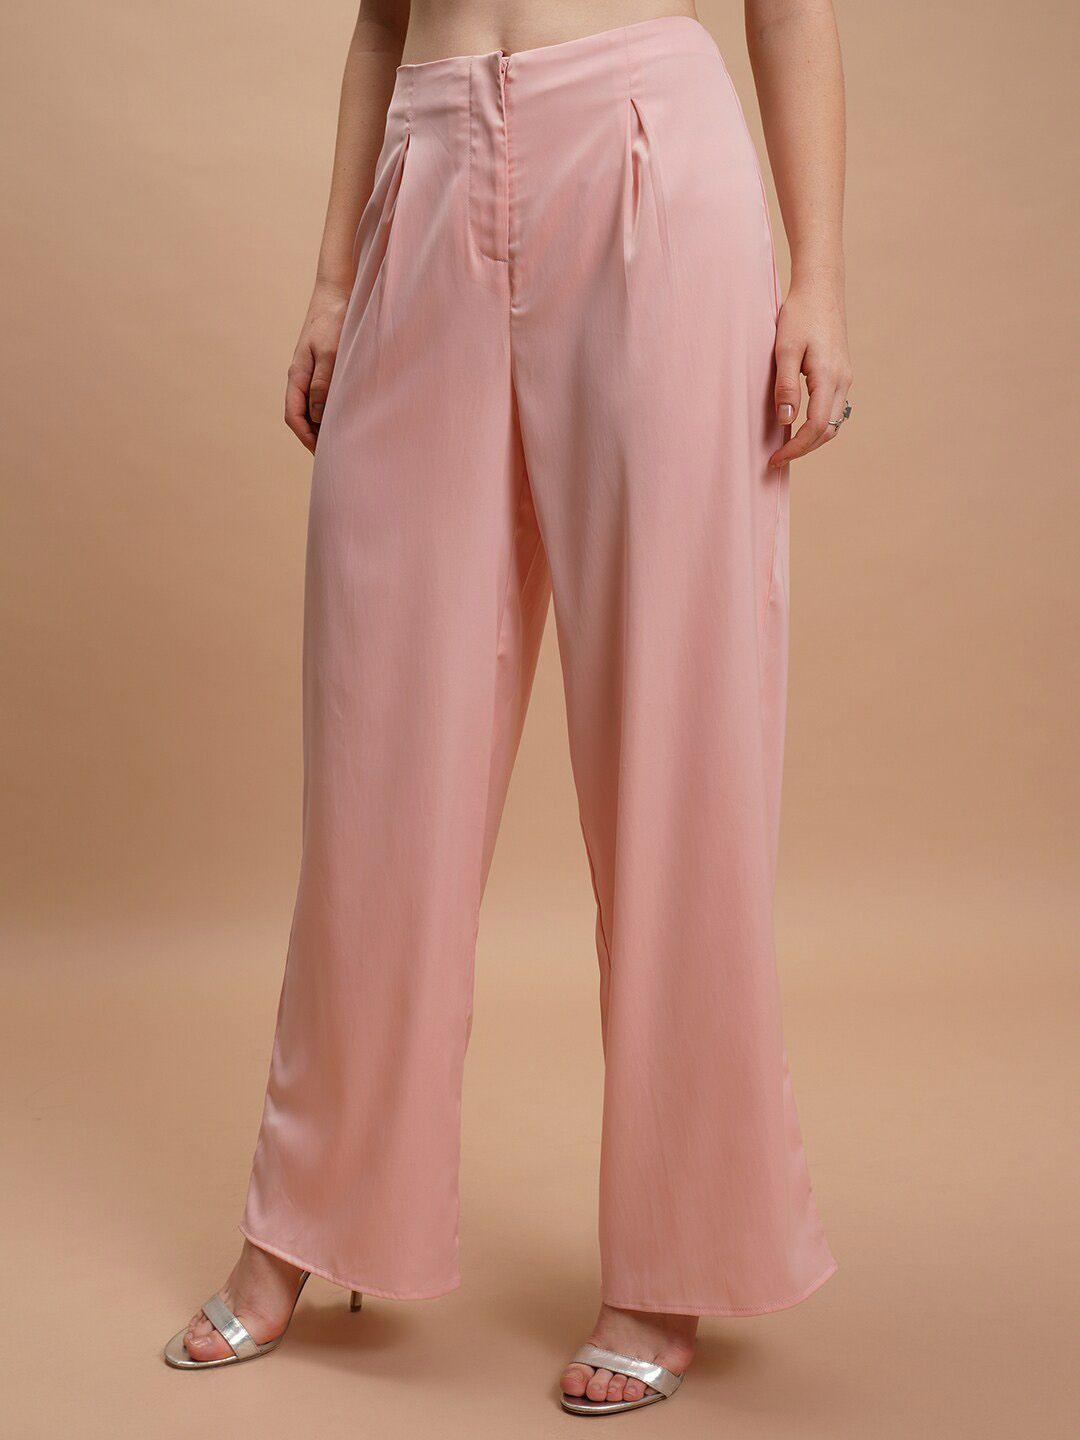 tokyo talkies women pink flared low-rise trousers